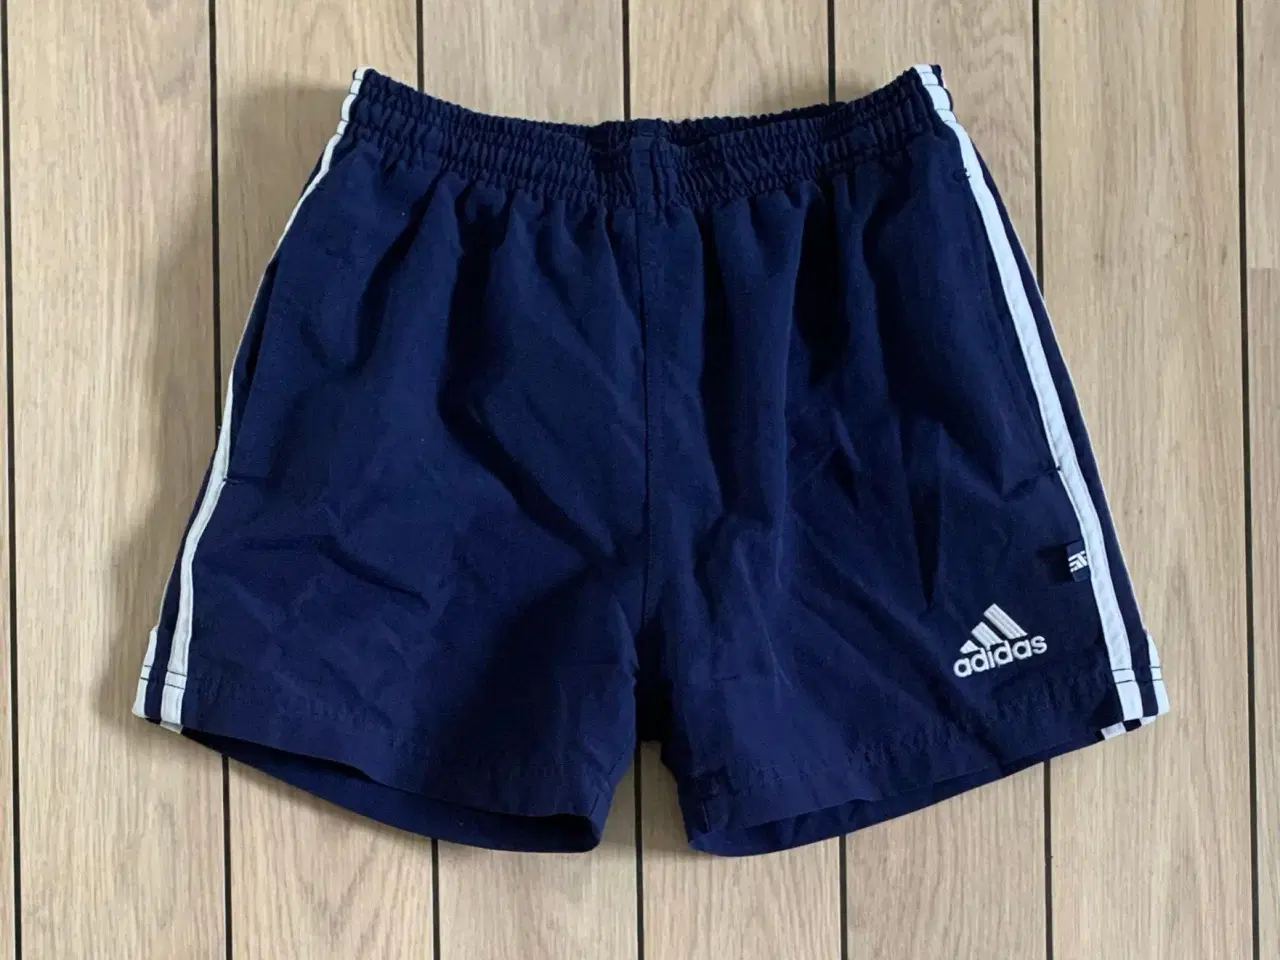 Billede 1 - Adidas shorts str. 140 i navy Adidas 3 stripes